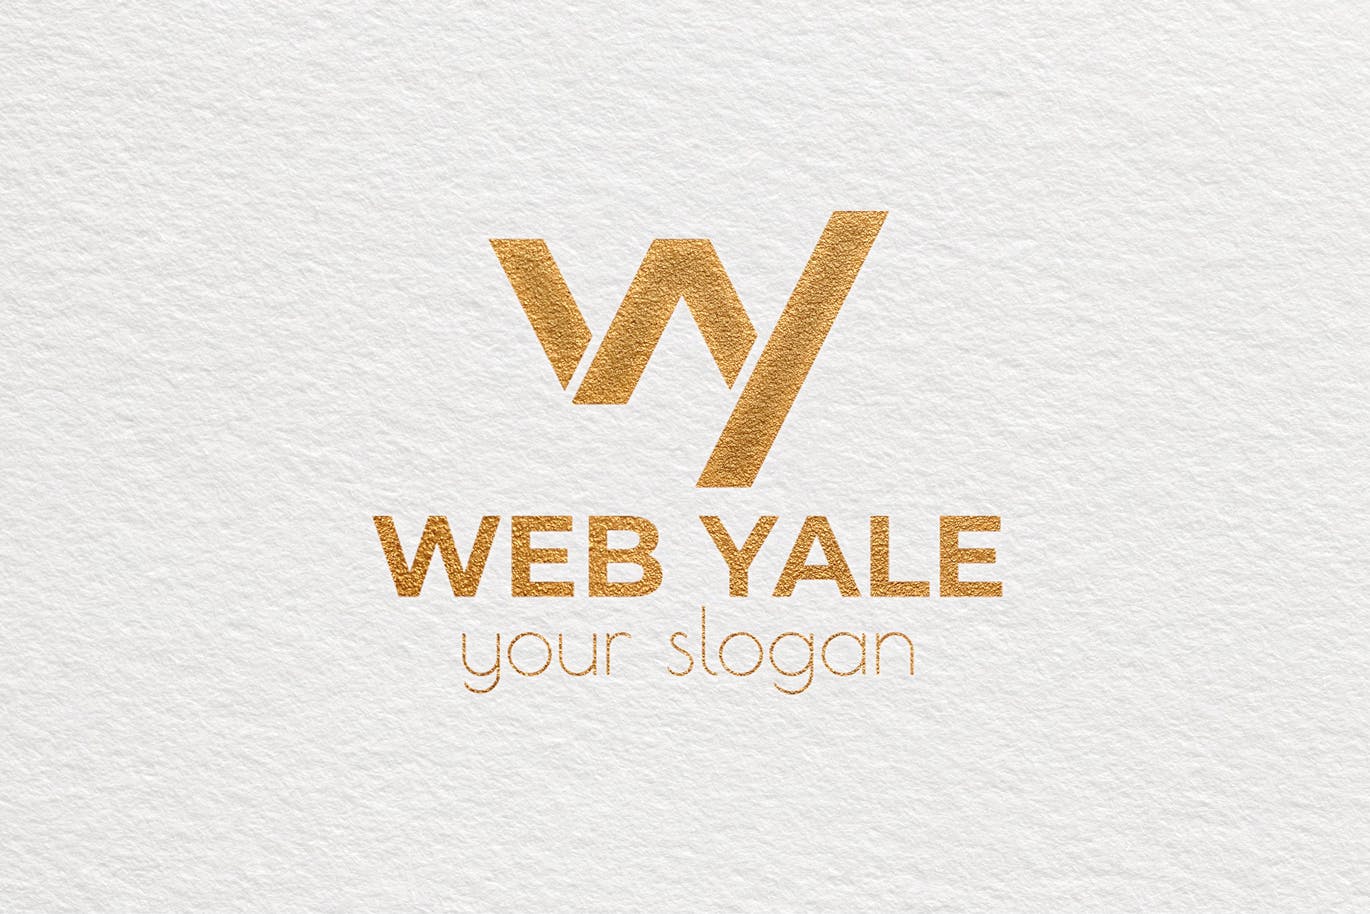 W&Y字母组合几何图形现代Logo设计素材库精选模板 Web Yale Modern Logo Template插图(3)